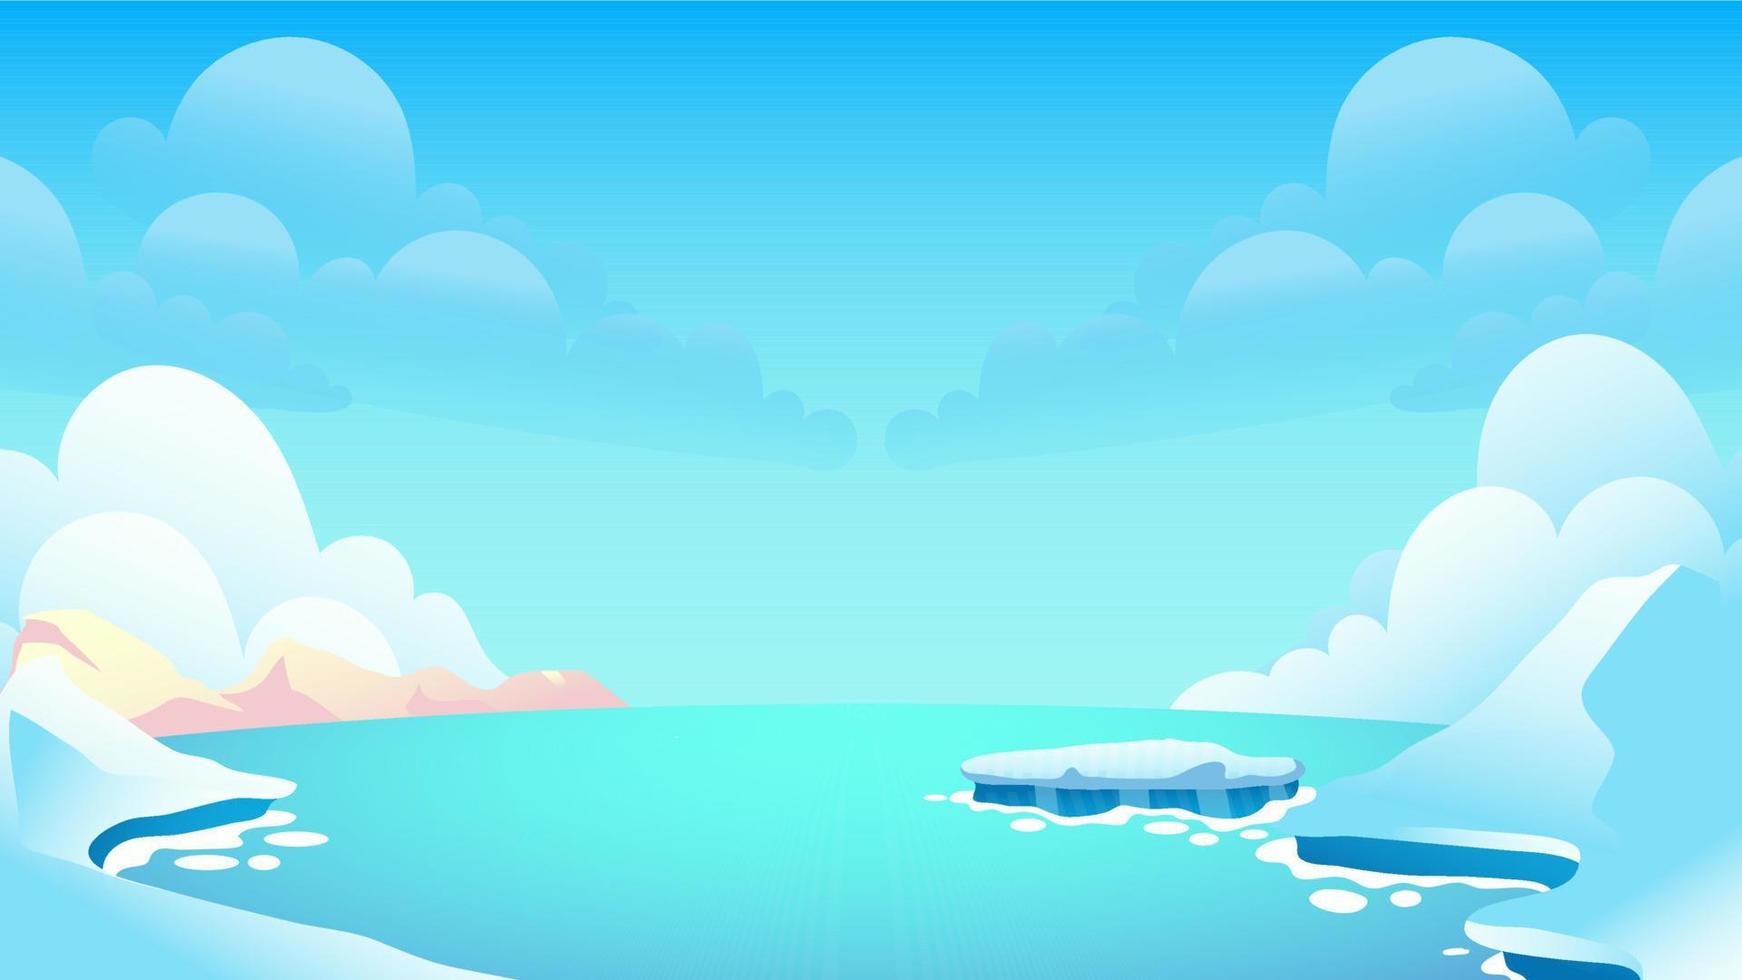 South pole vector illustration background